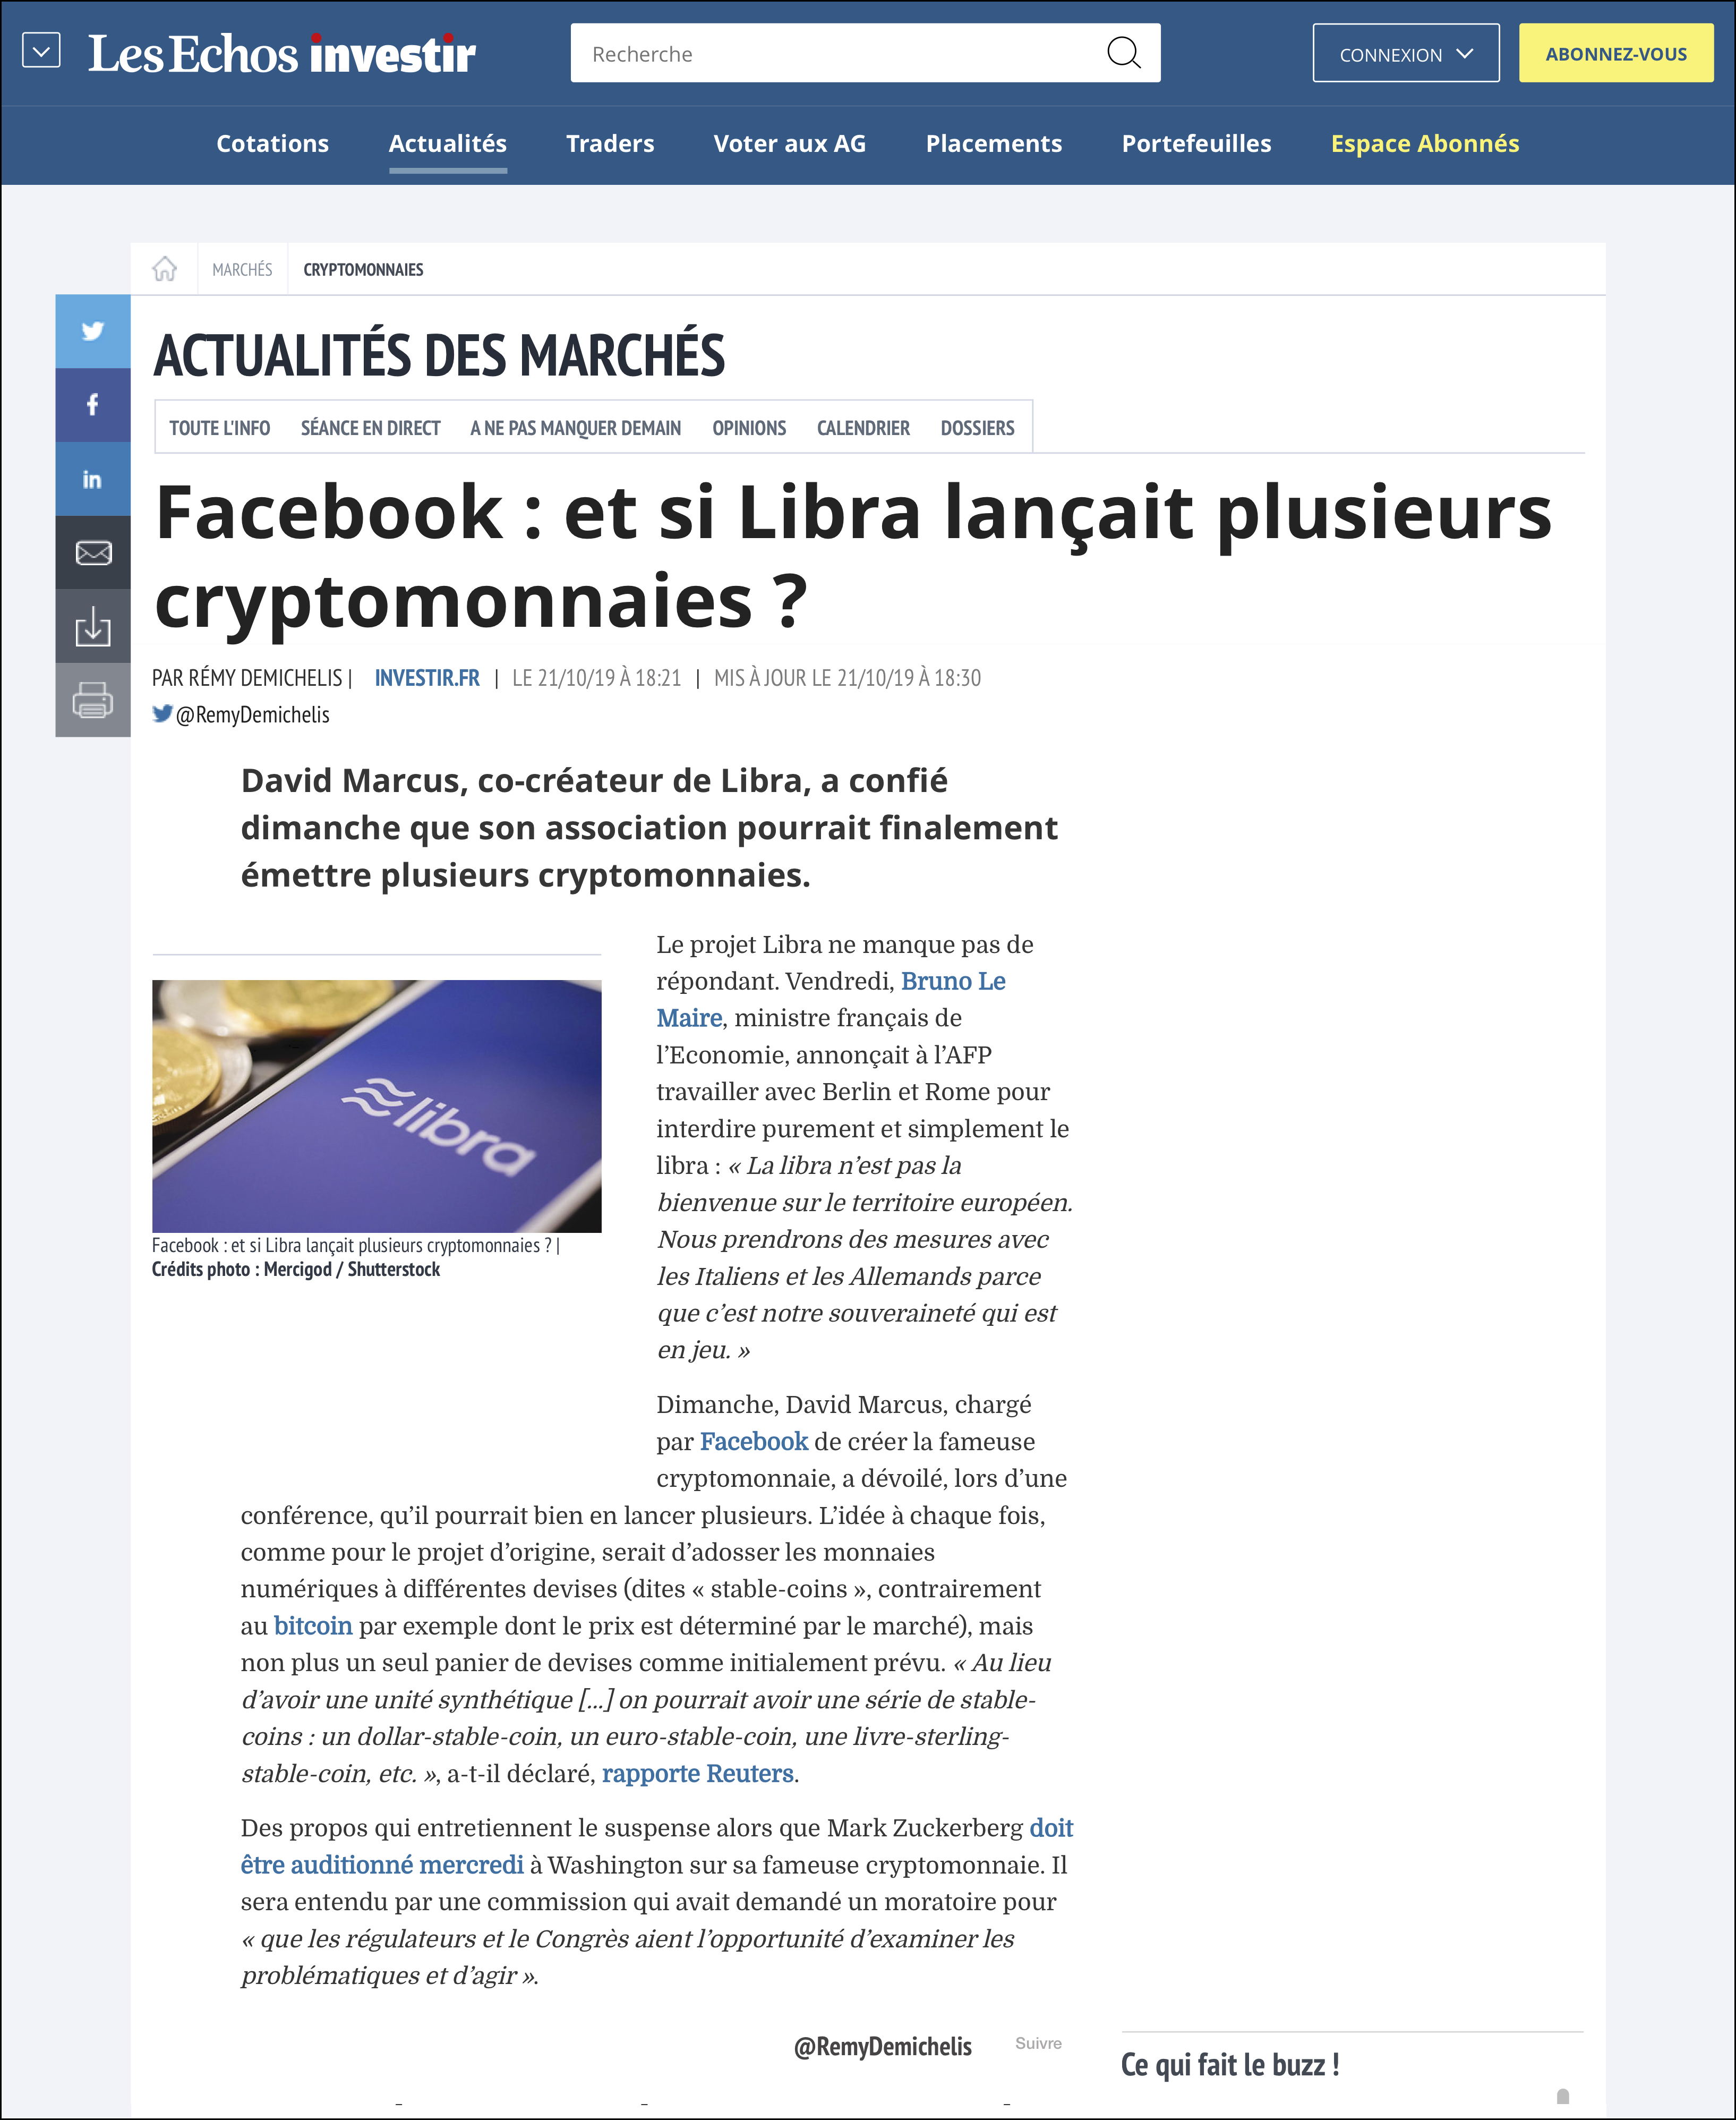 Facebook _ et si Libra lançait plusieurs cryptomonnaies _, Cryptomonnaies - Investir-Les Echos Bourse.jpg